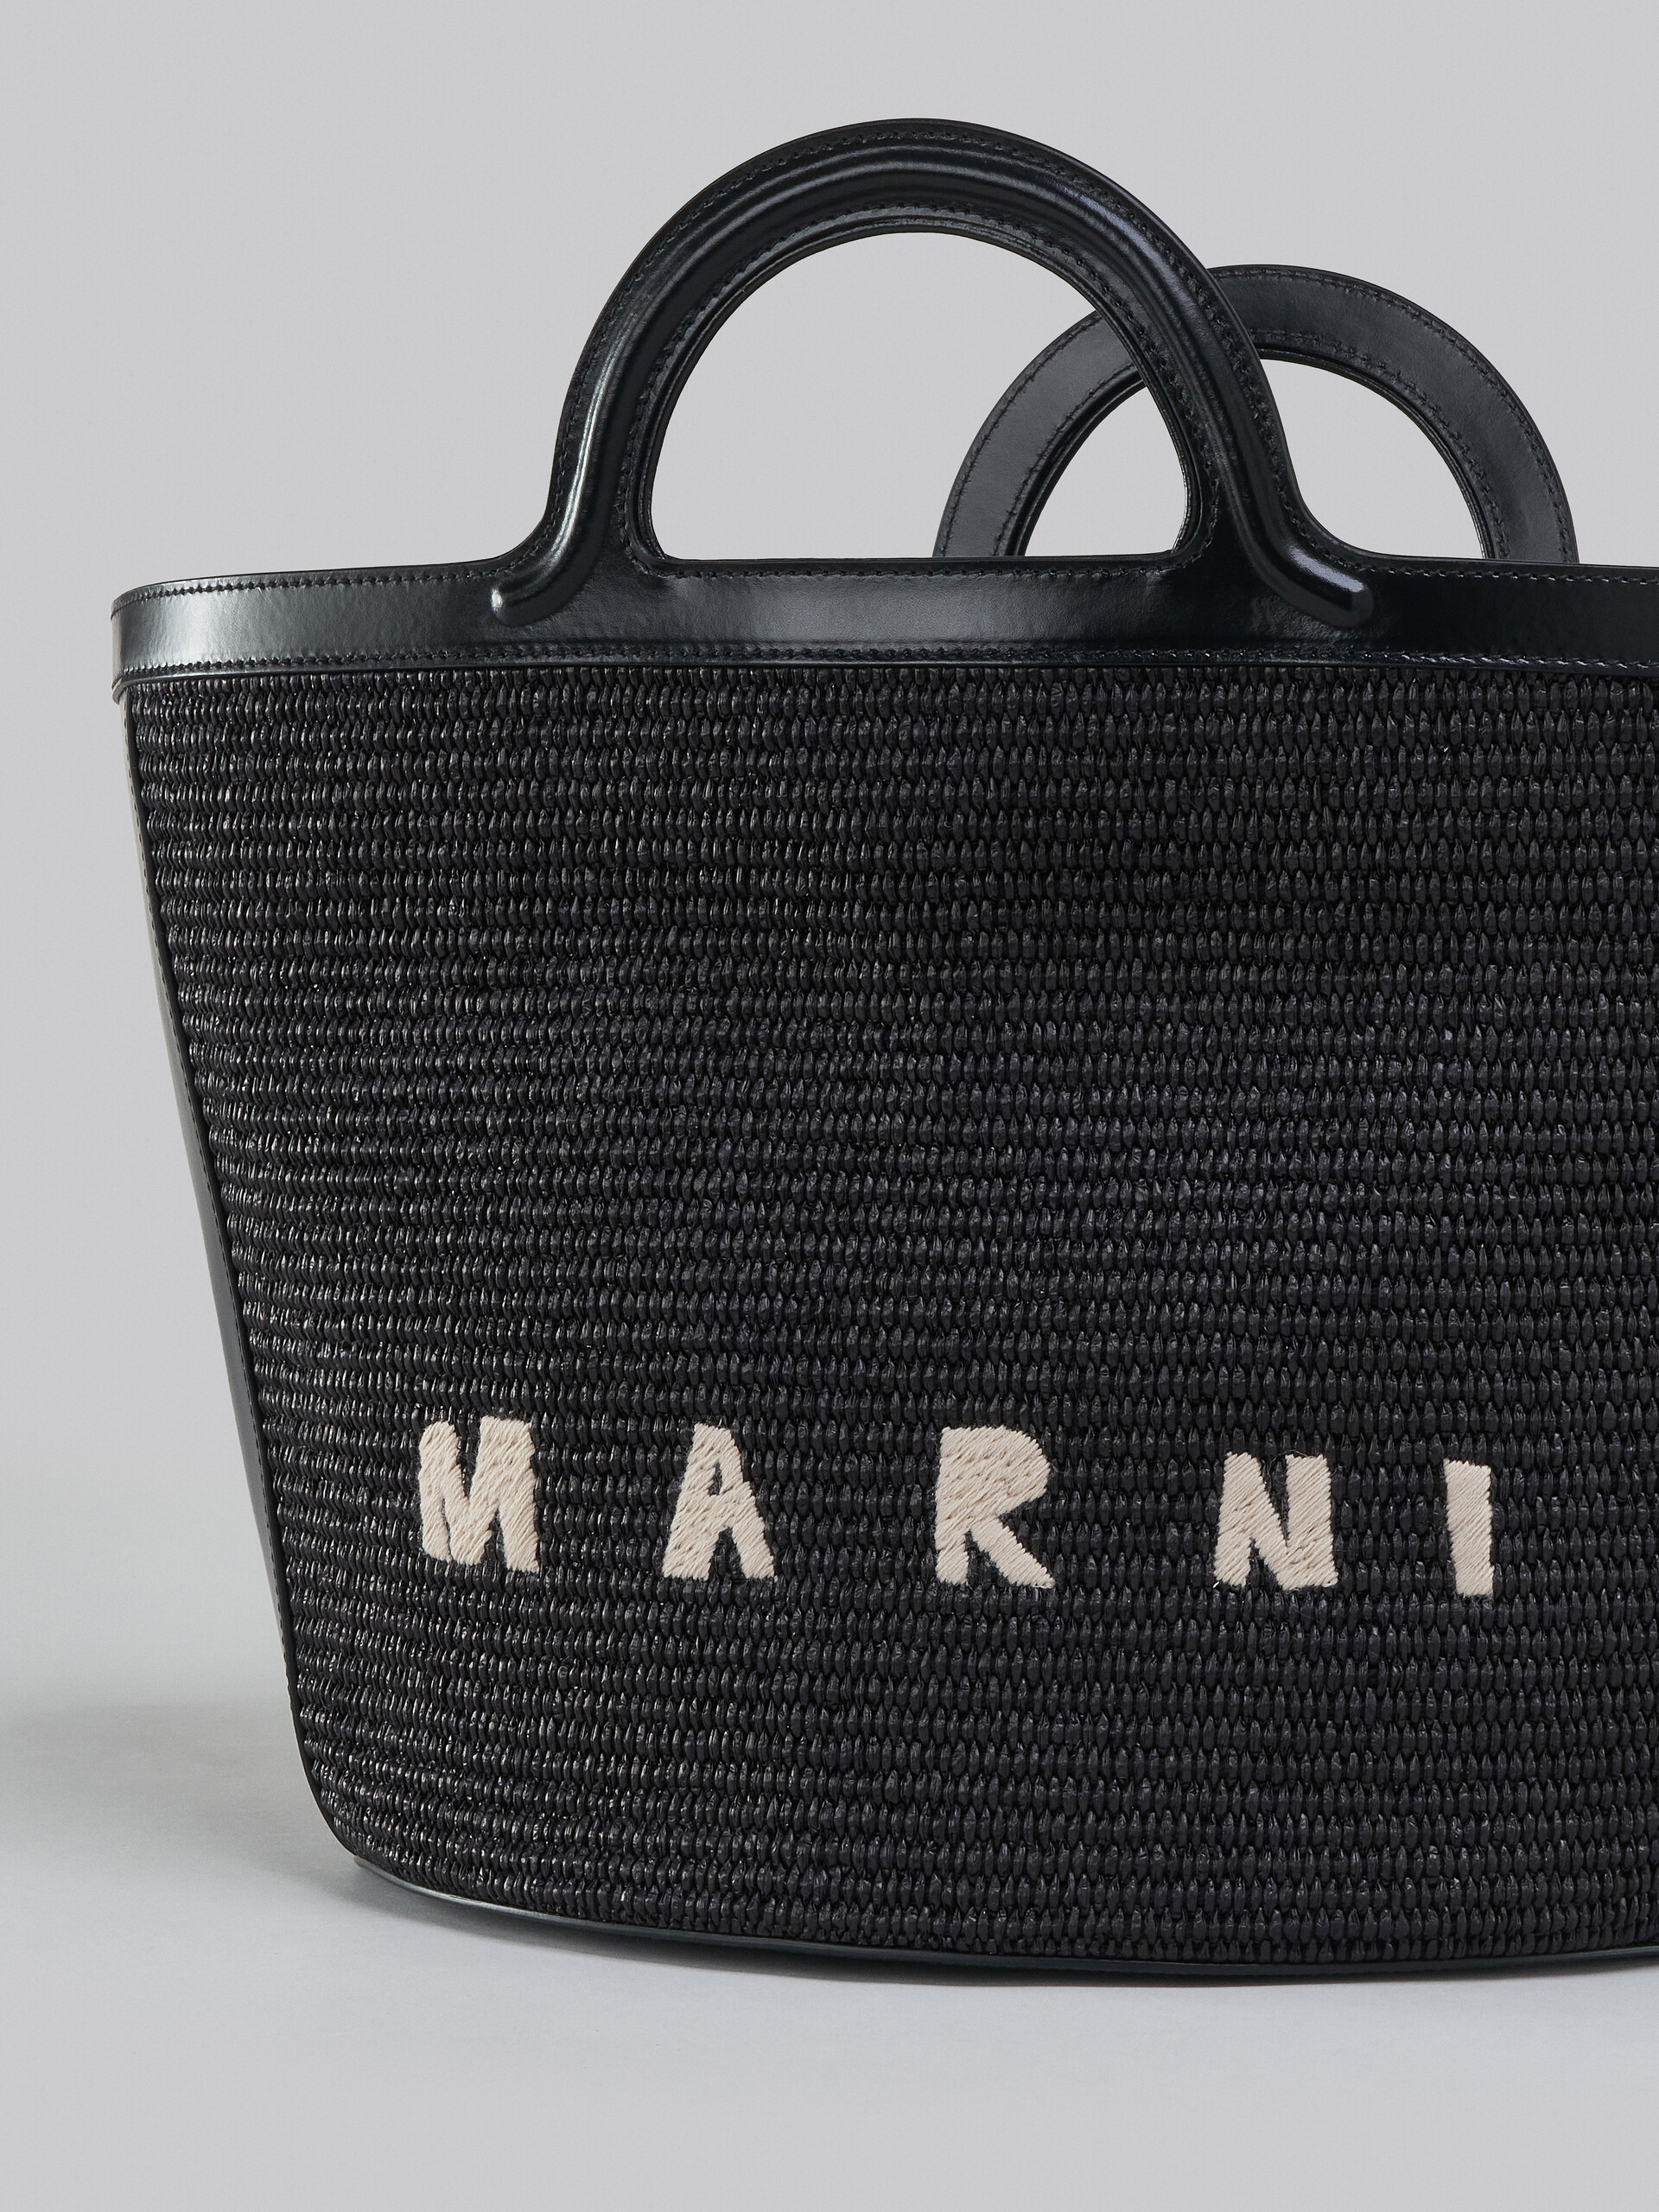 MARNI: Tropicalia leather bag - Dark  Marni handbag BMMP0097U0LV589 online  at